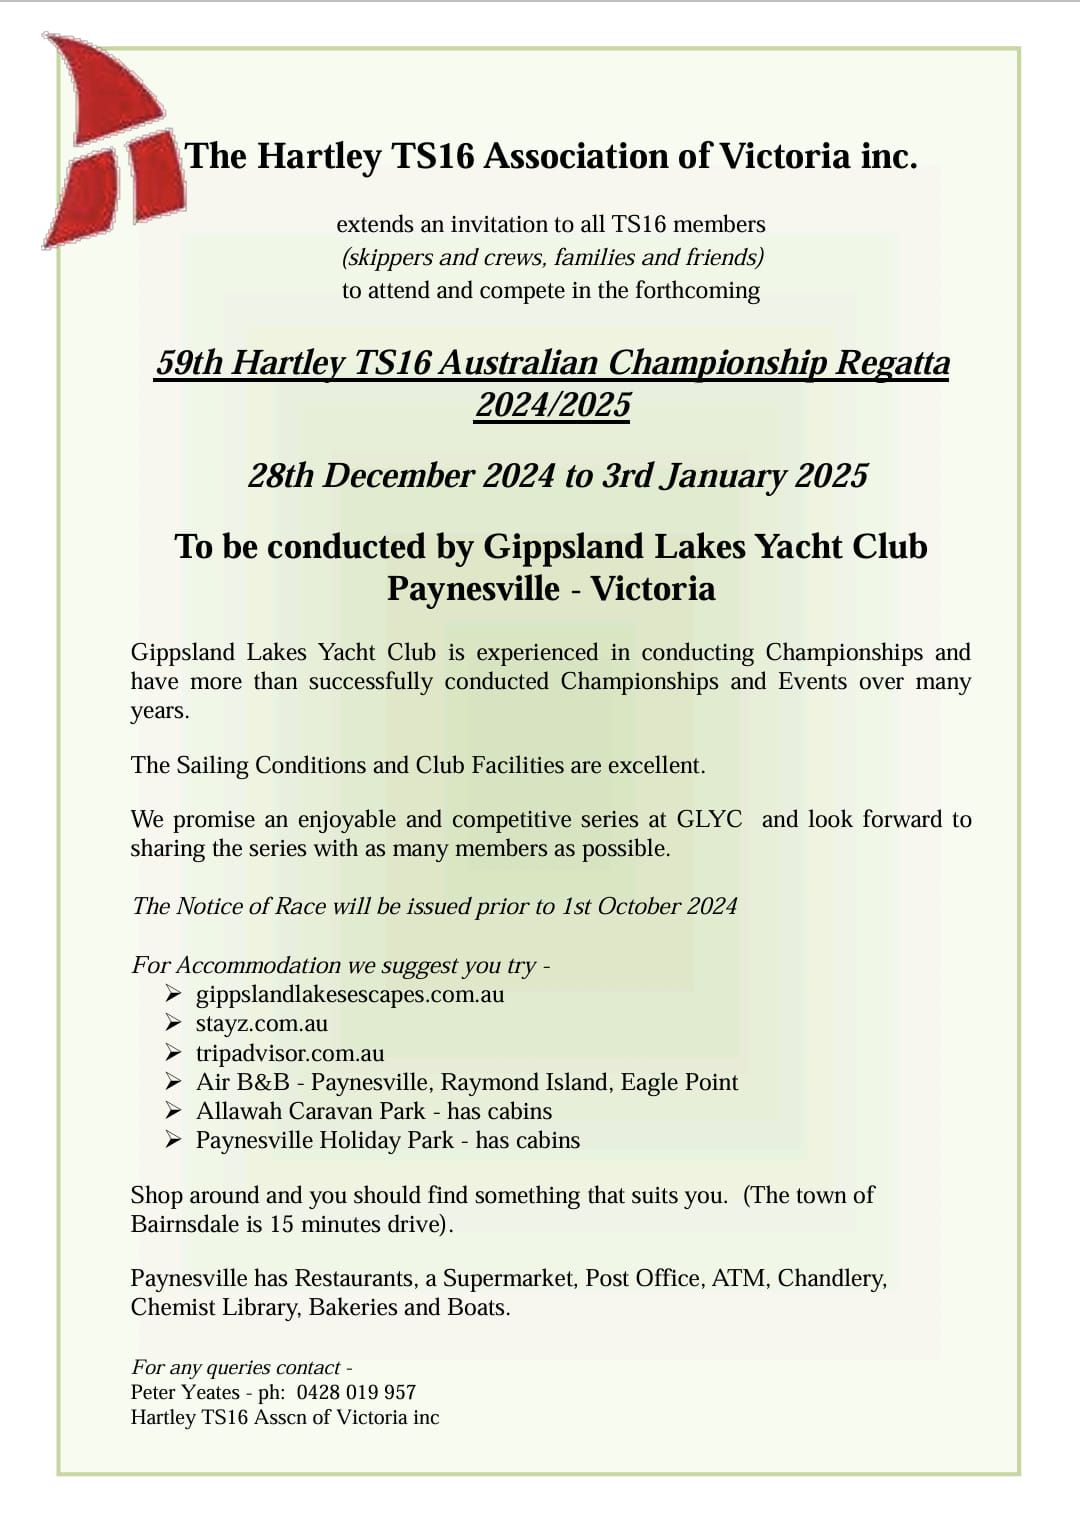 59th HARTLEY TS16 Australian Championships, Paynesville Victoria.